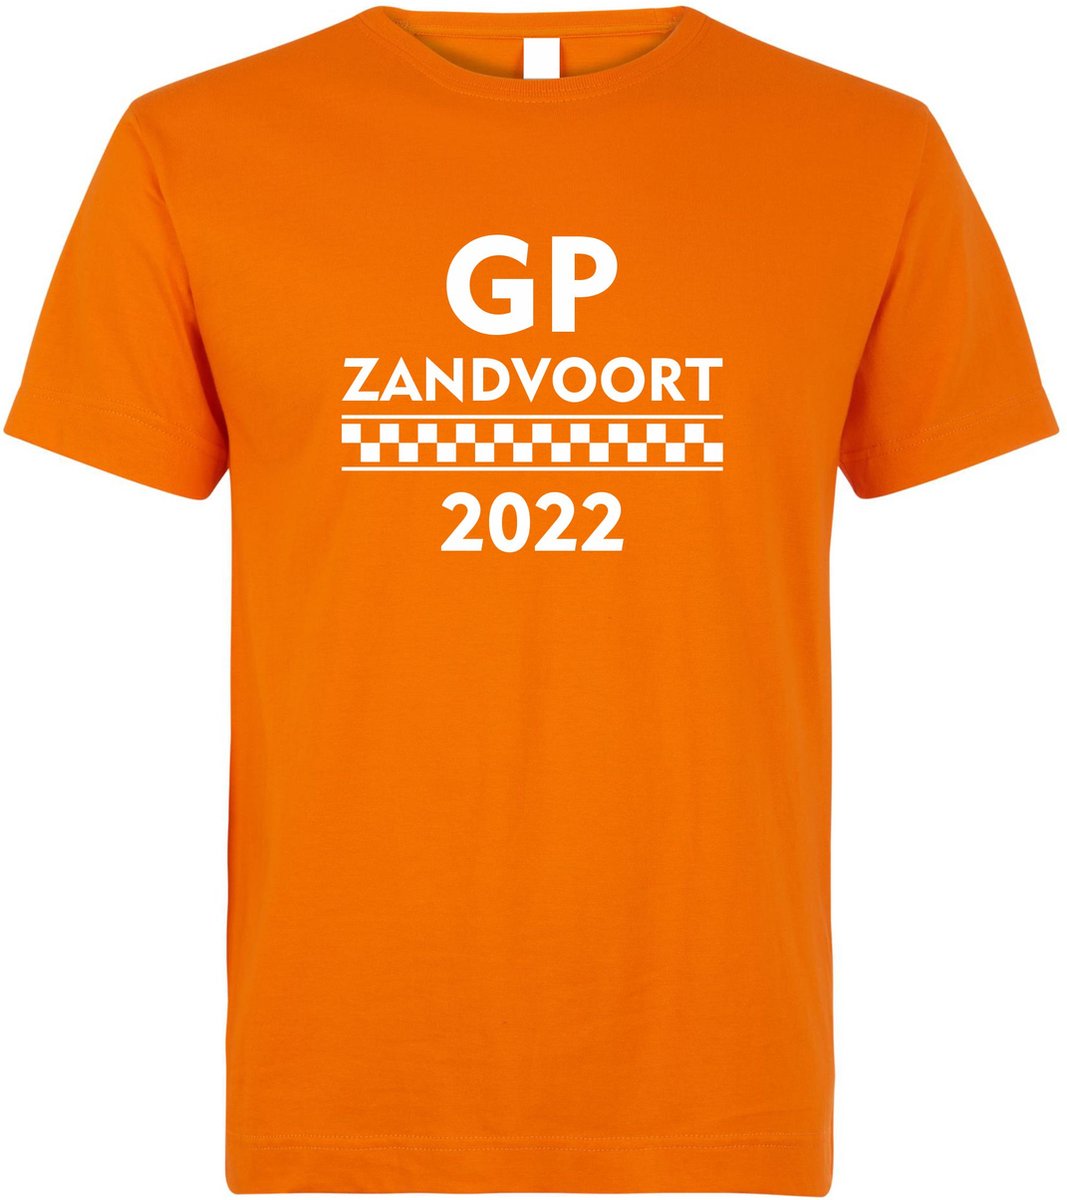 T-shirt kinderen GP Zandvoort 2022 | Max Verstappen / Red Bull Racing / Formule 1 fan | Grand Prix Circuit Zandvoort | kleding shirt | Oranje | maat 164